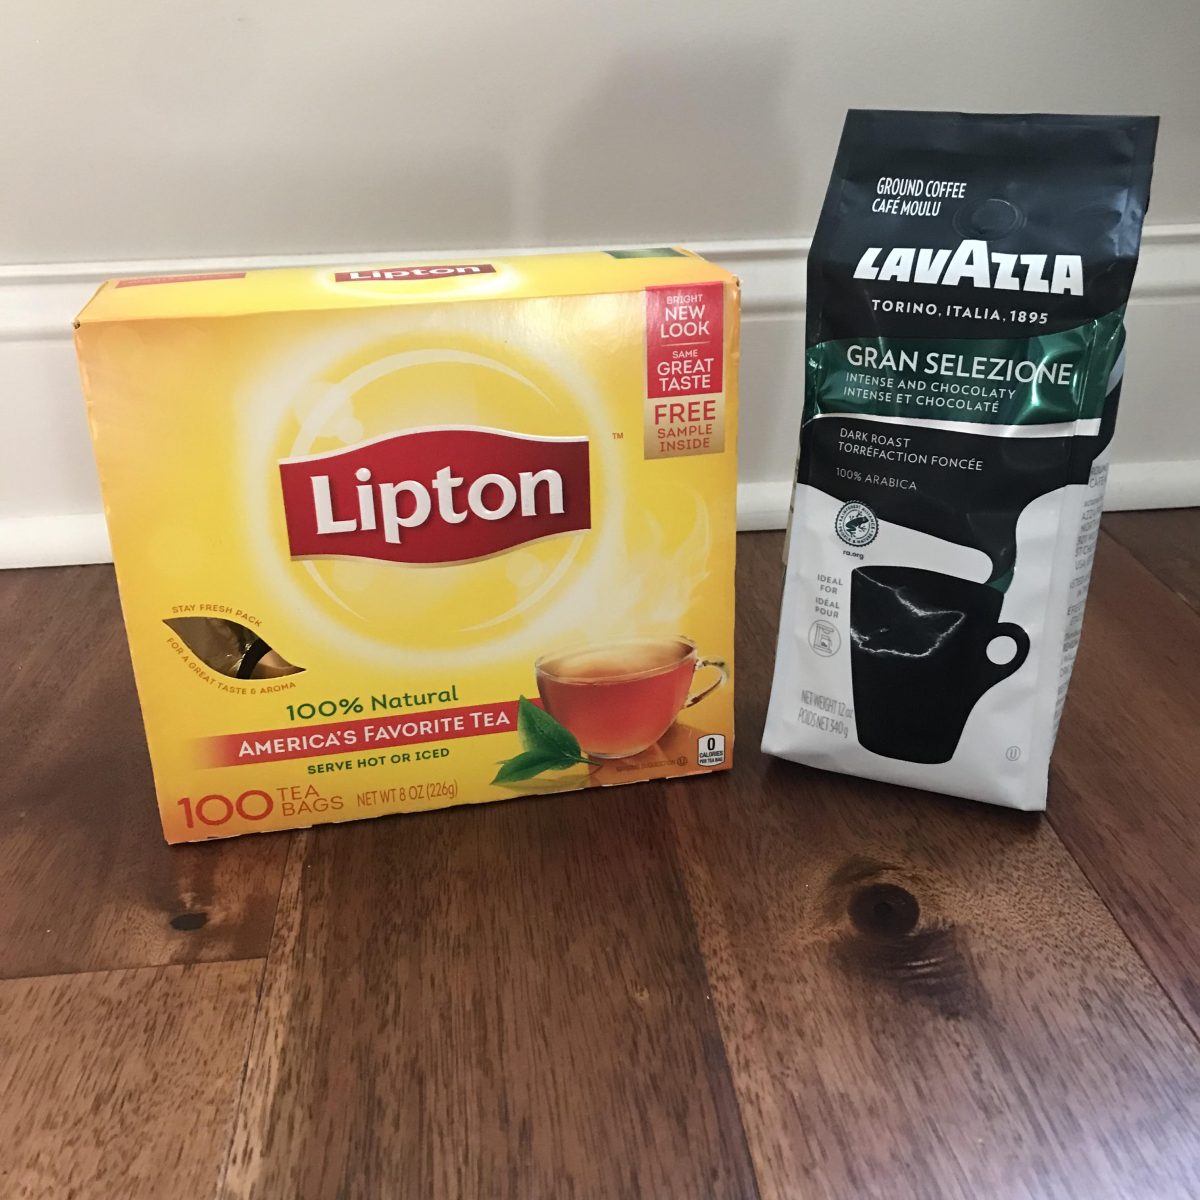 A box of Lipton tea next to a bag of Lavazza coffee.